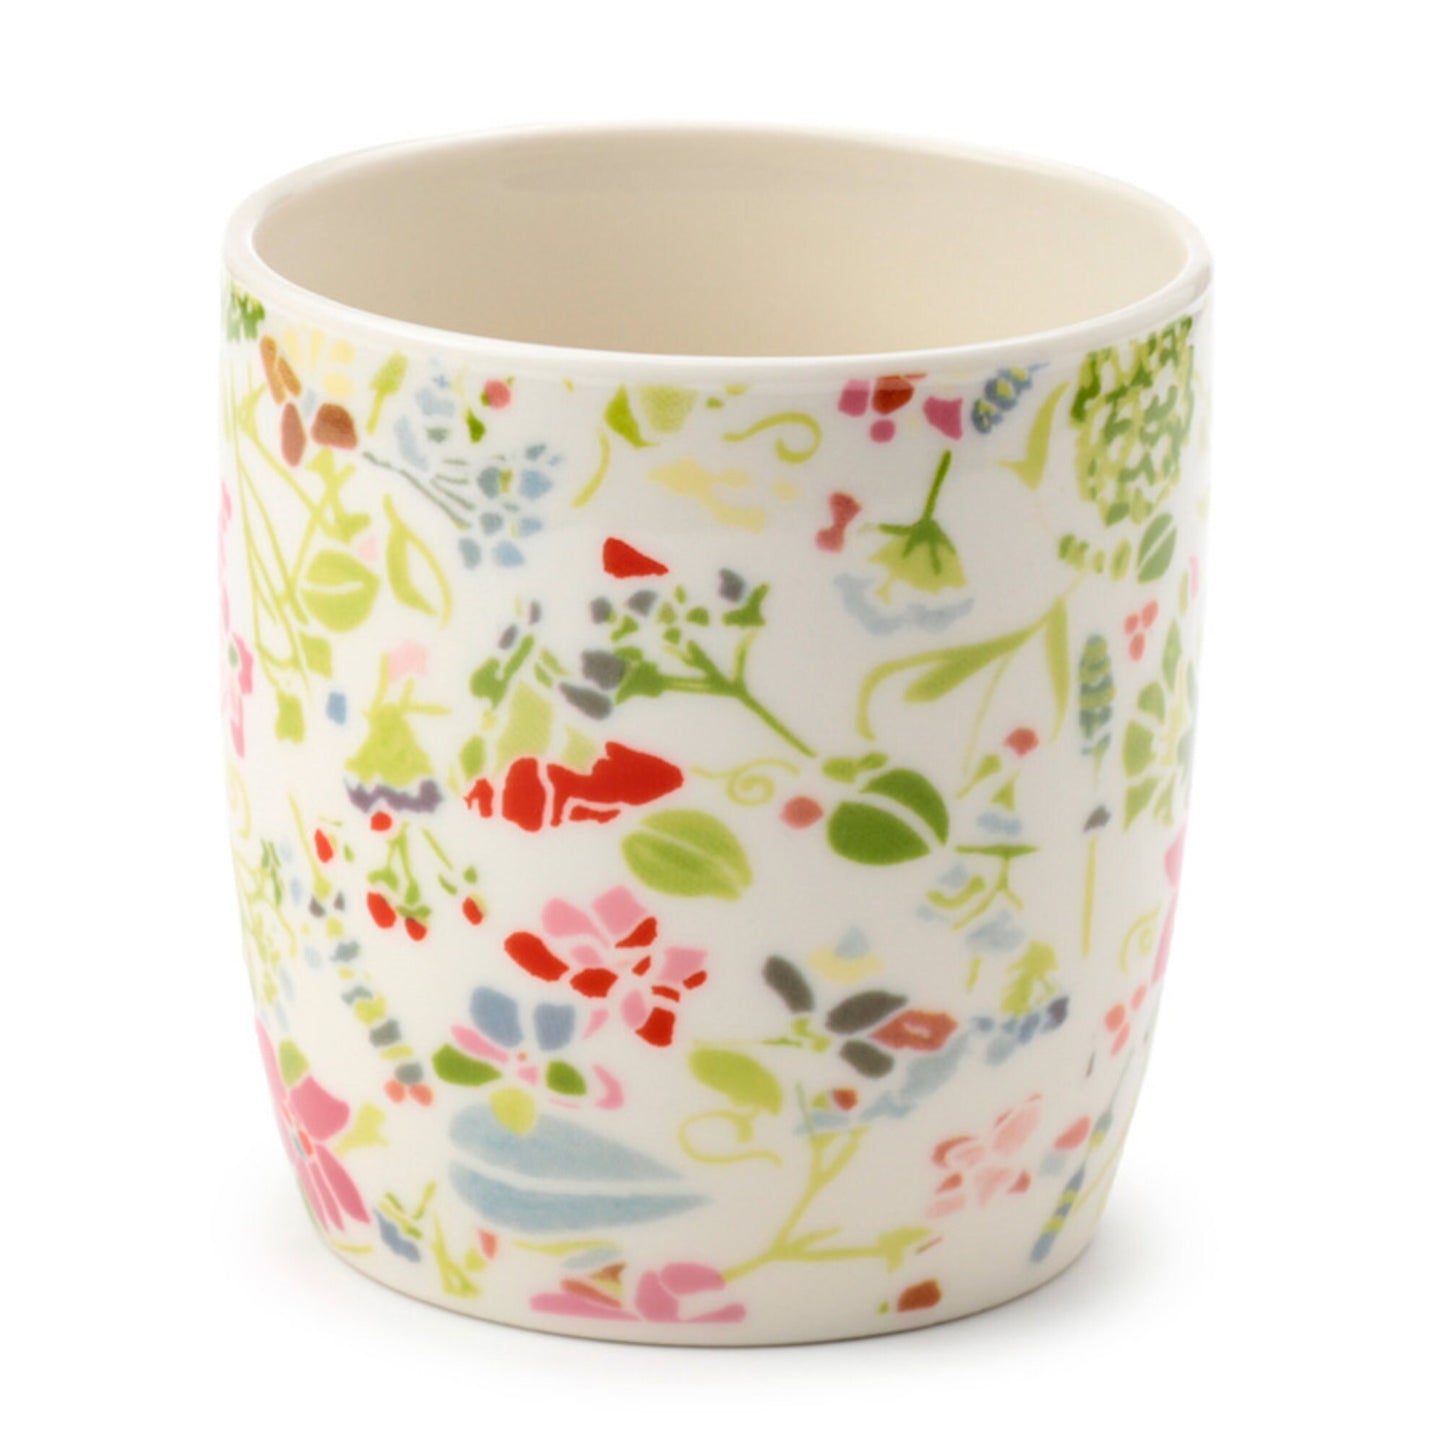 Pink Botanicals Design Beautiful Porcelain Coffee Mug